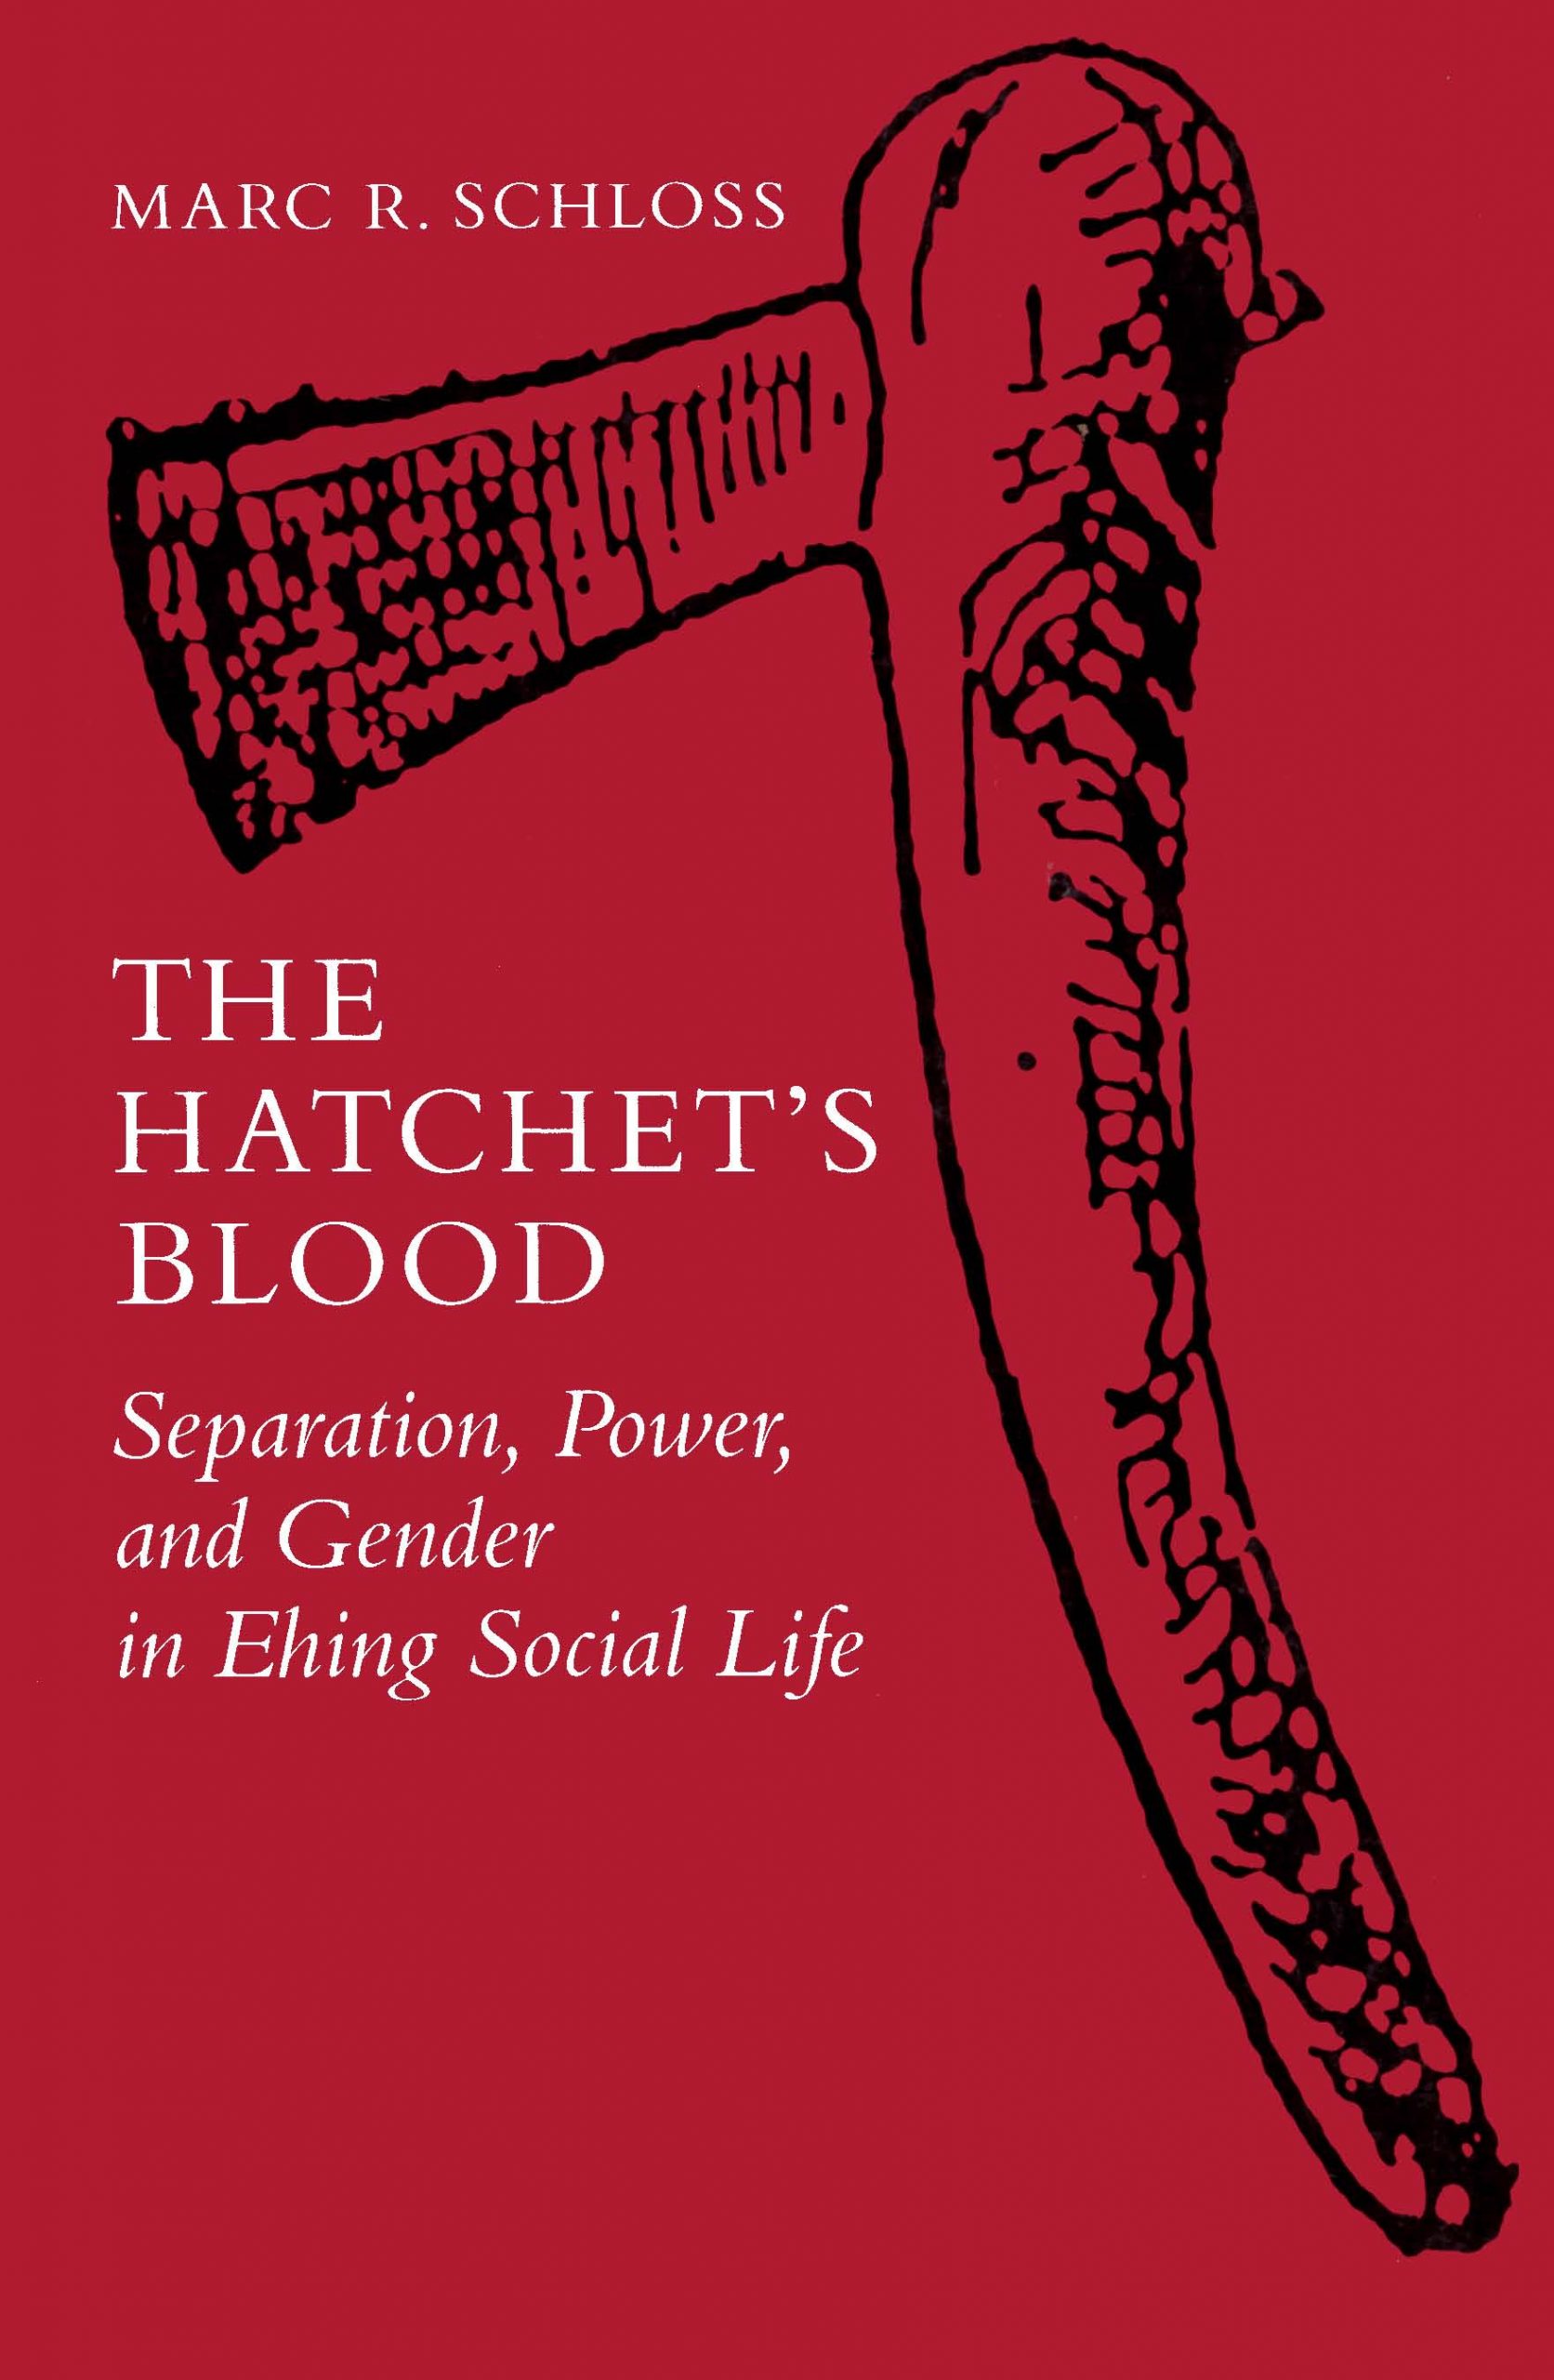 The Hatchet's Blood